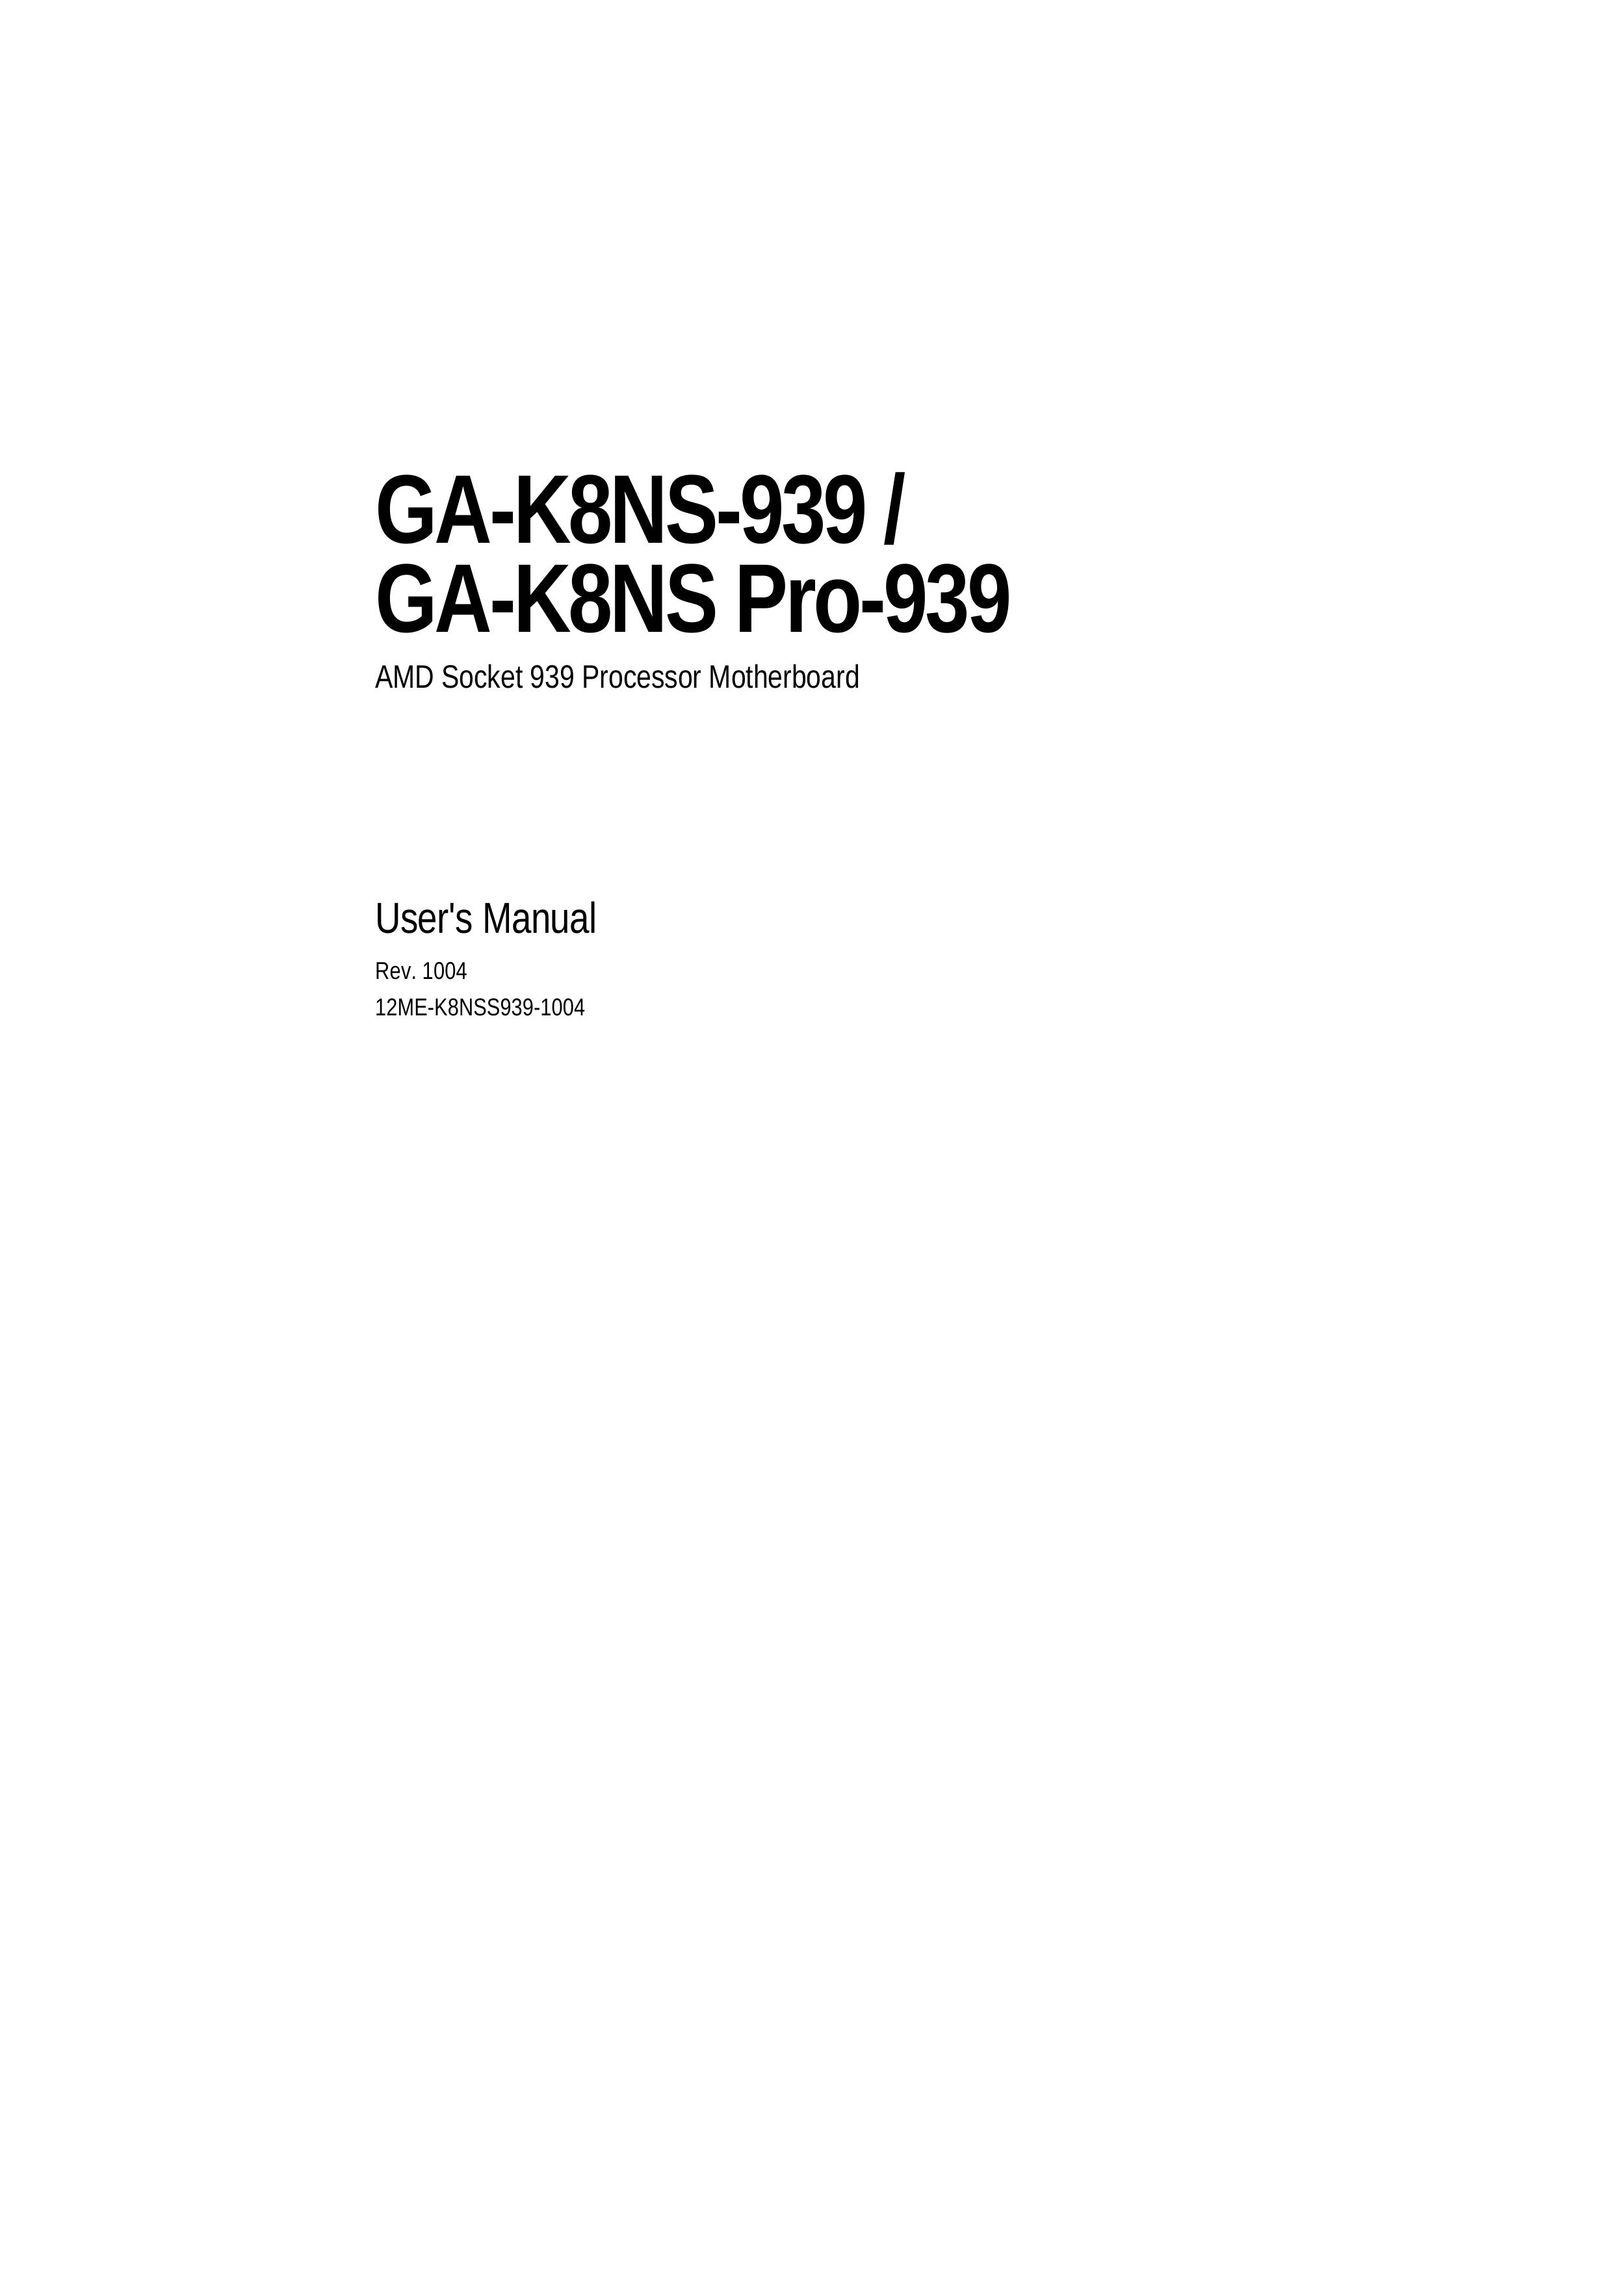 AMD GA-K8NS-939 Computer Hardware User Manual